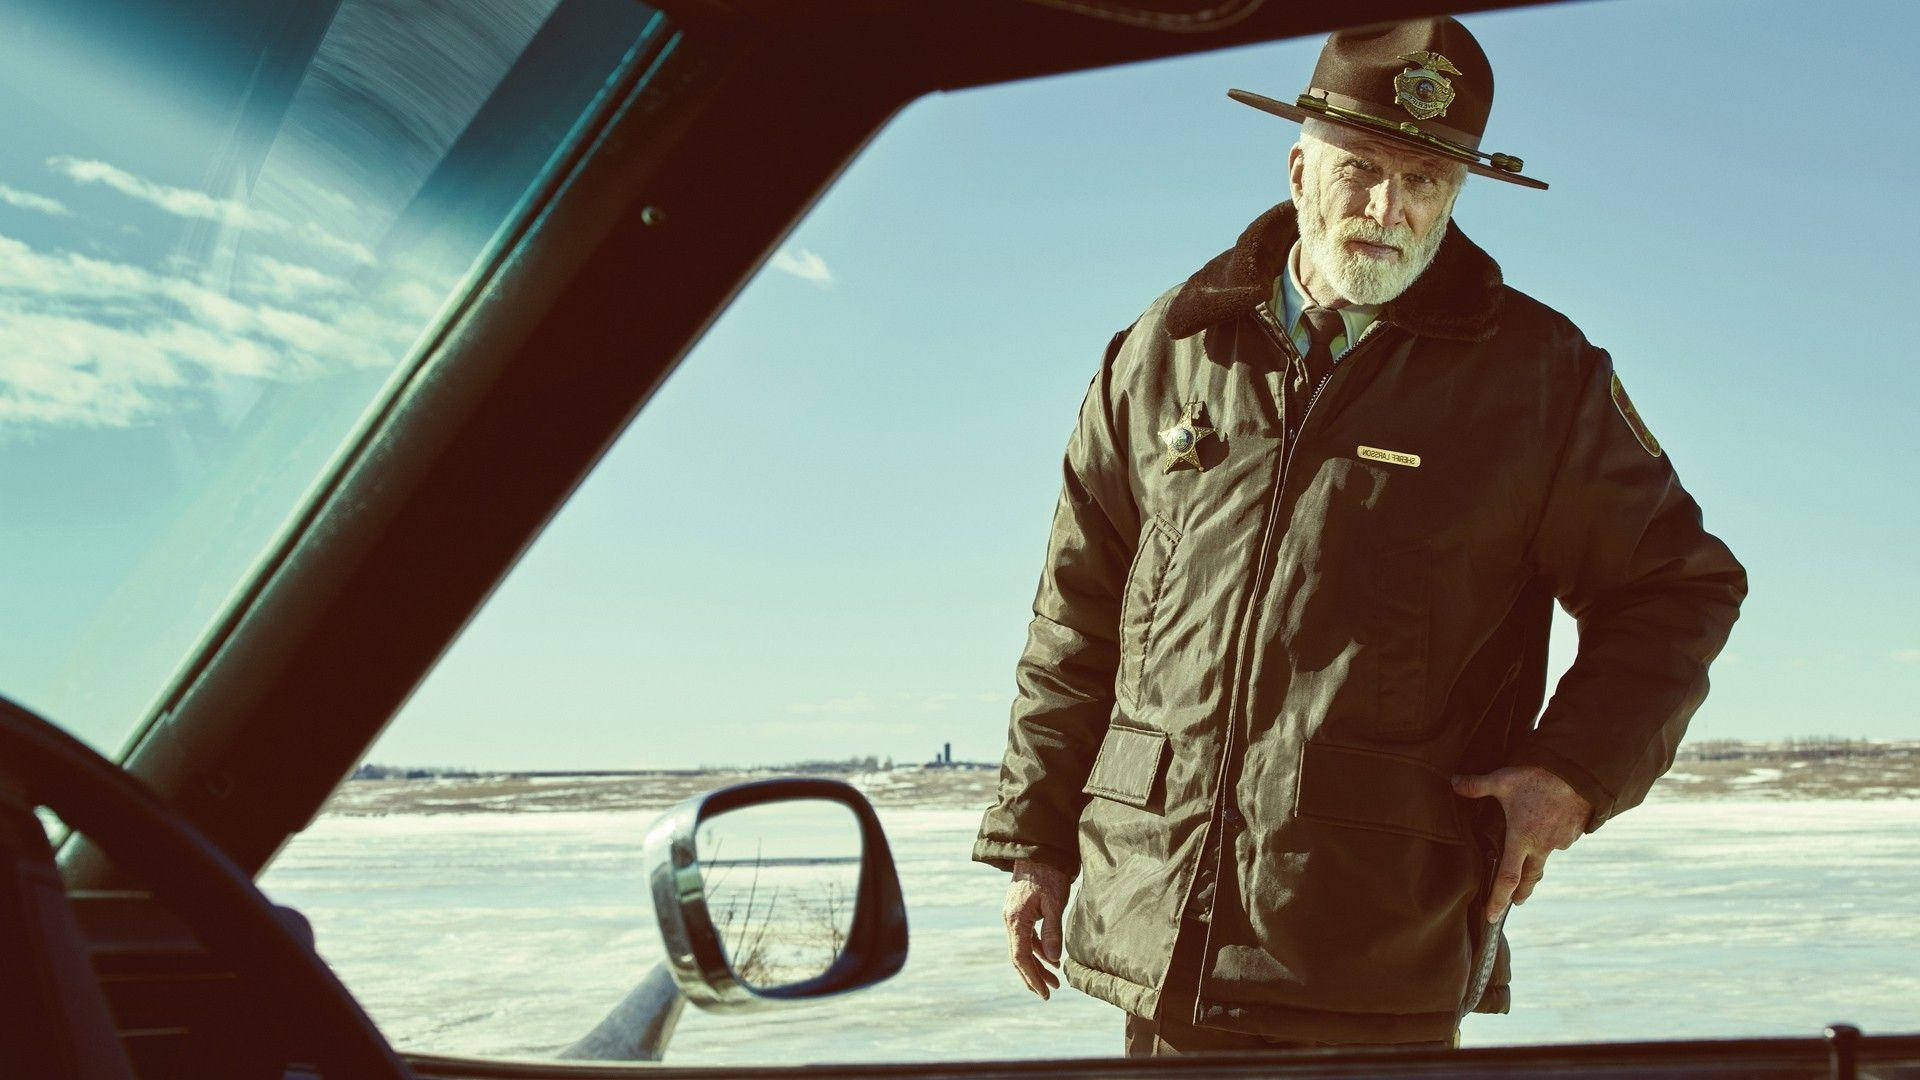 Caption: Elderly Man in Fargo Pondering Life Wallpaper